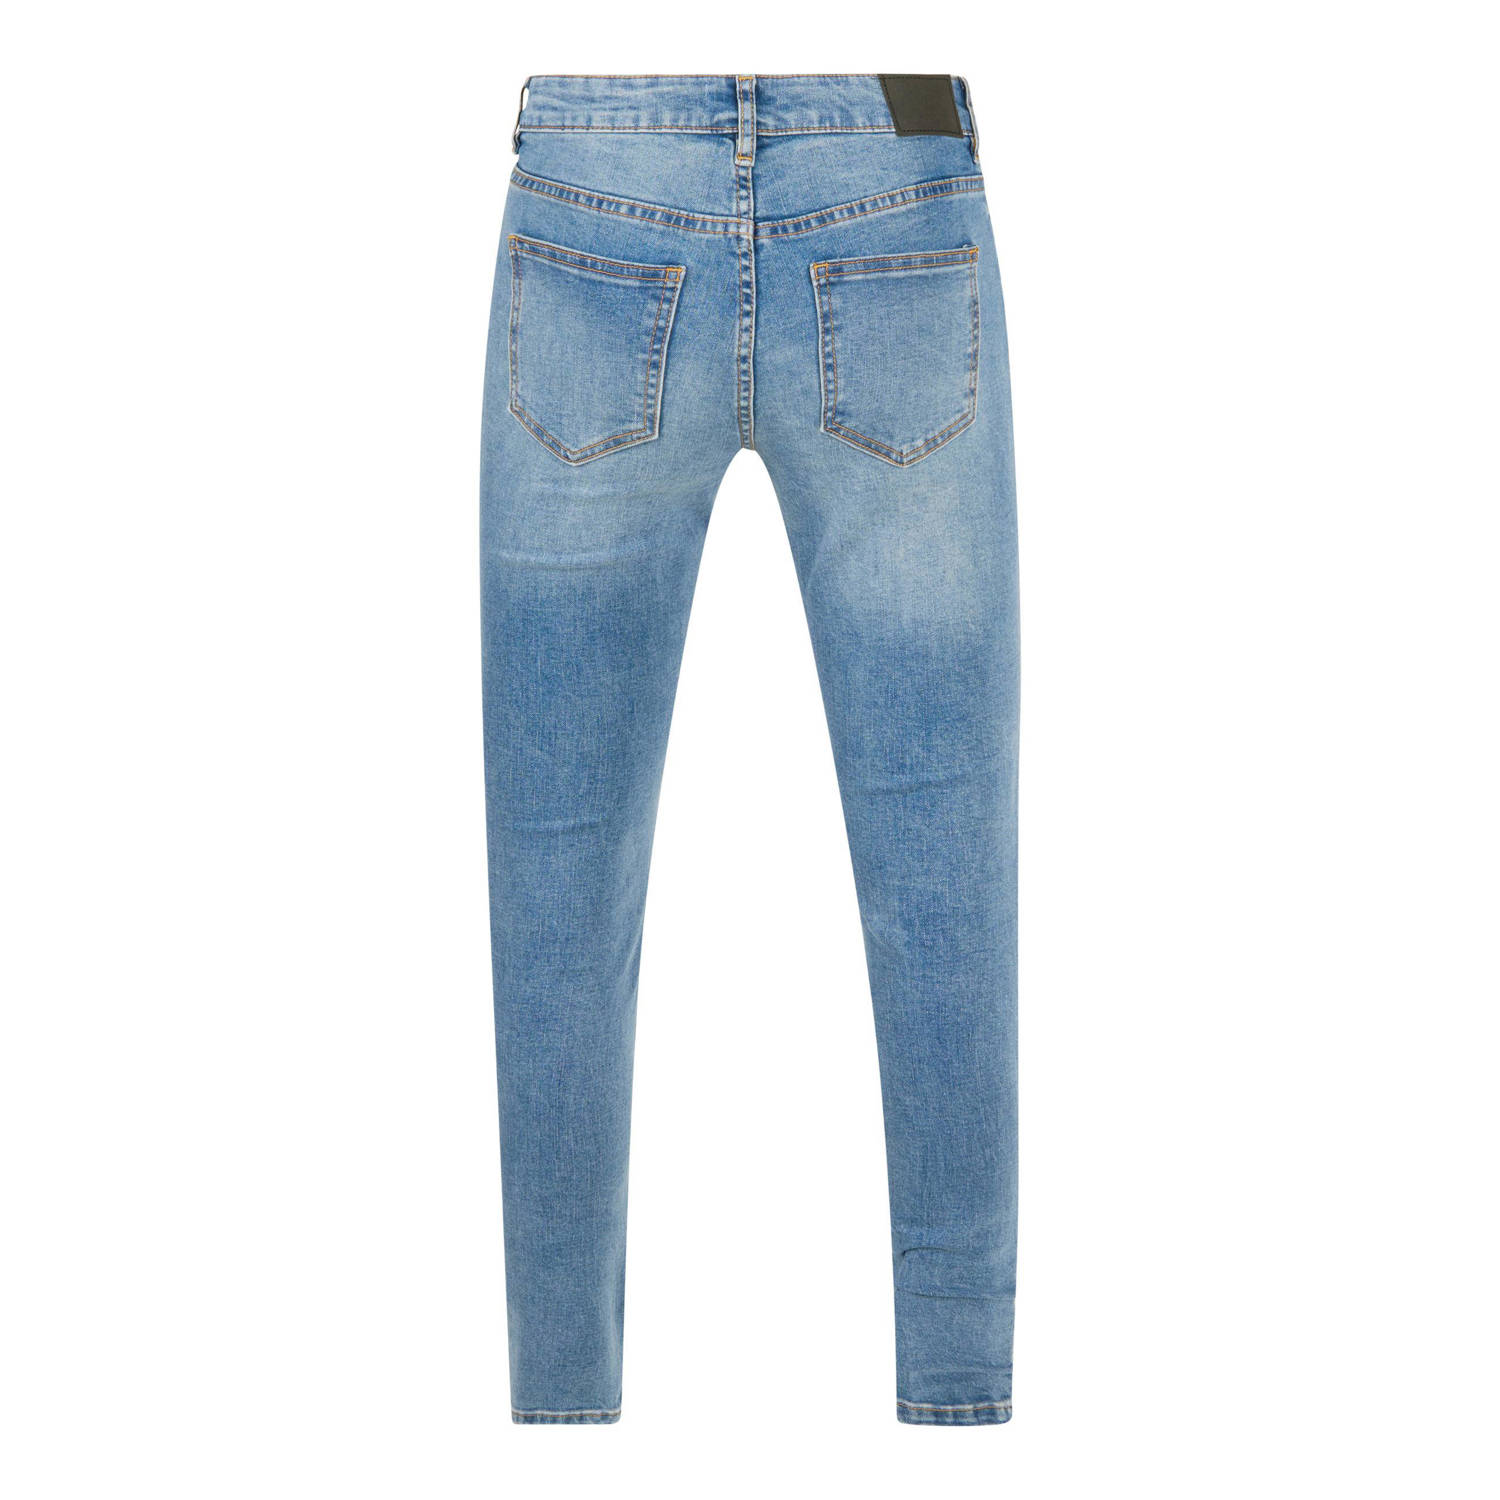 Shoeby skinny jeans medium blue denim